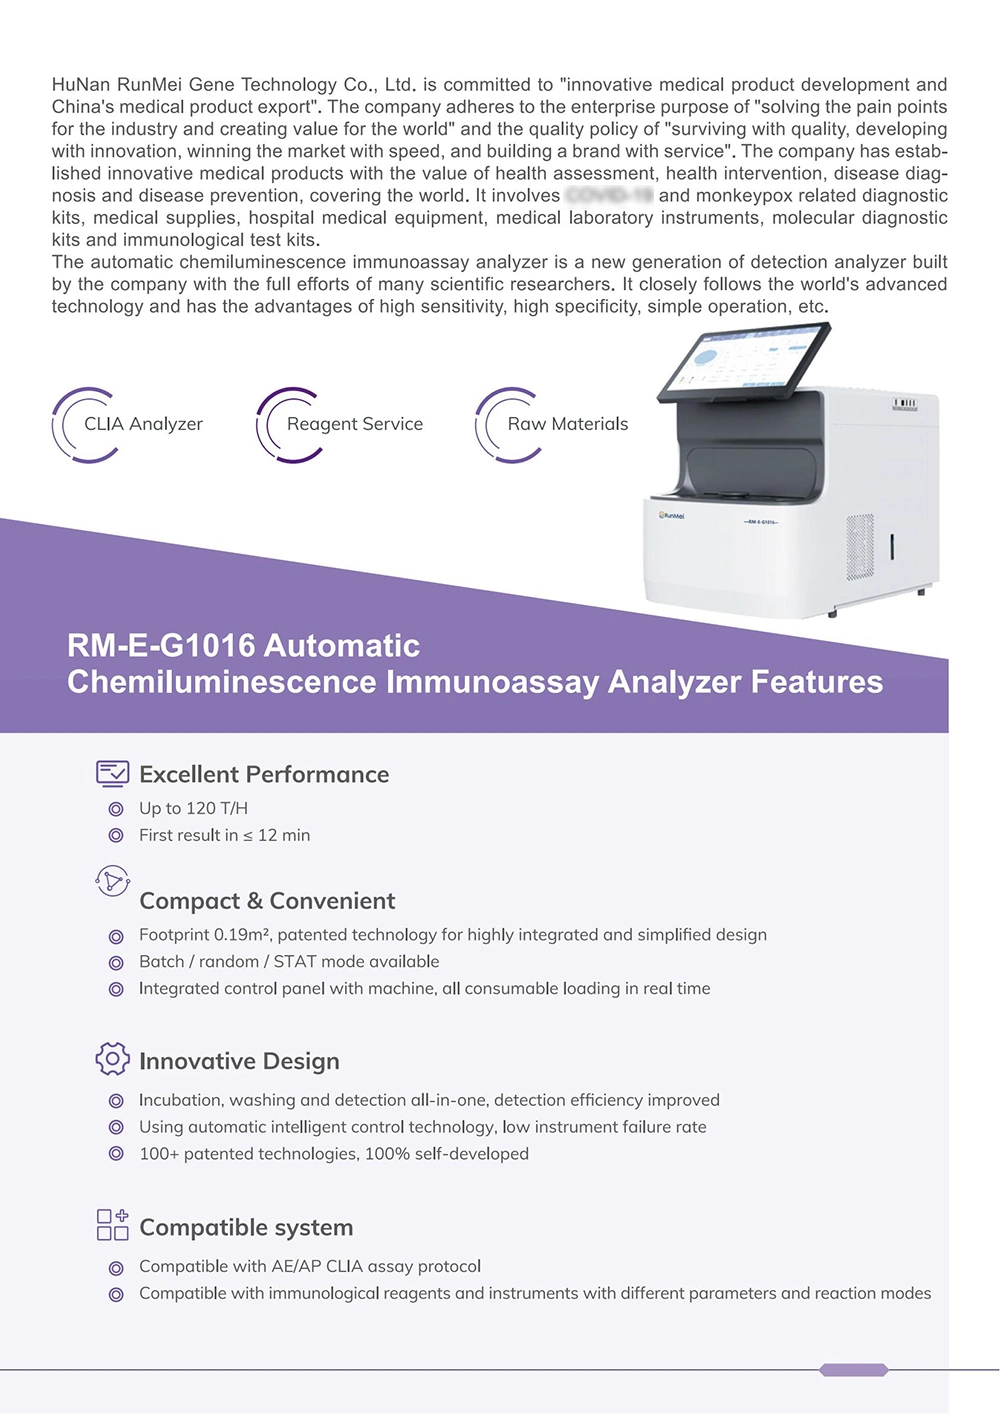 Clinical Analytical Instruments Poct Clia Analyzer Fully Auto Chemiluminescence Immunoassay Analyzer